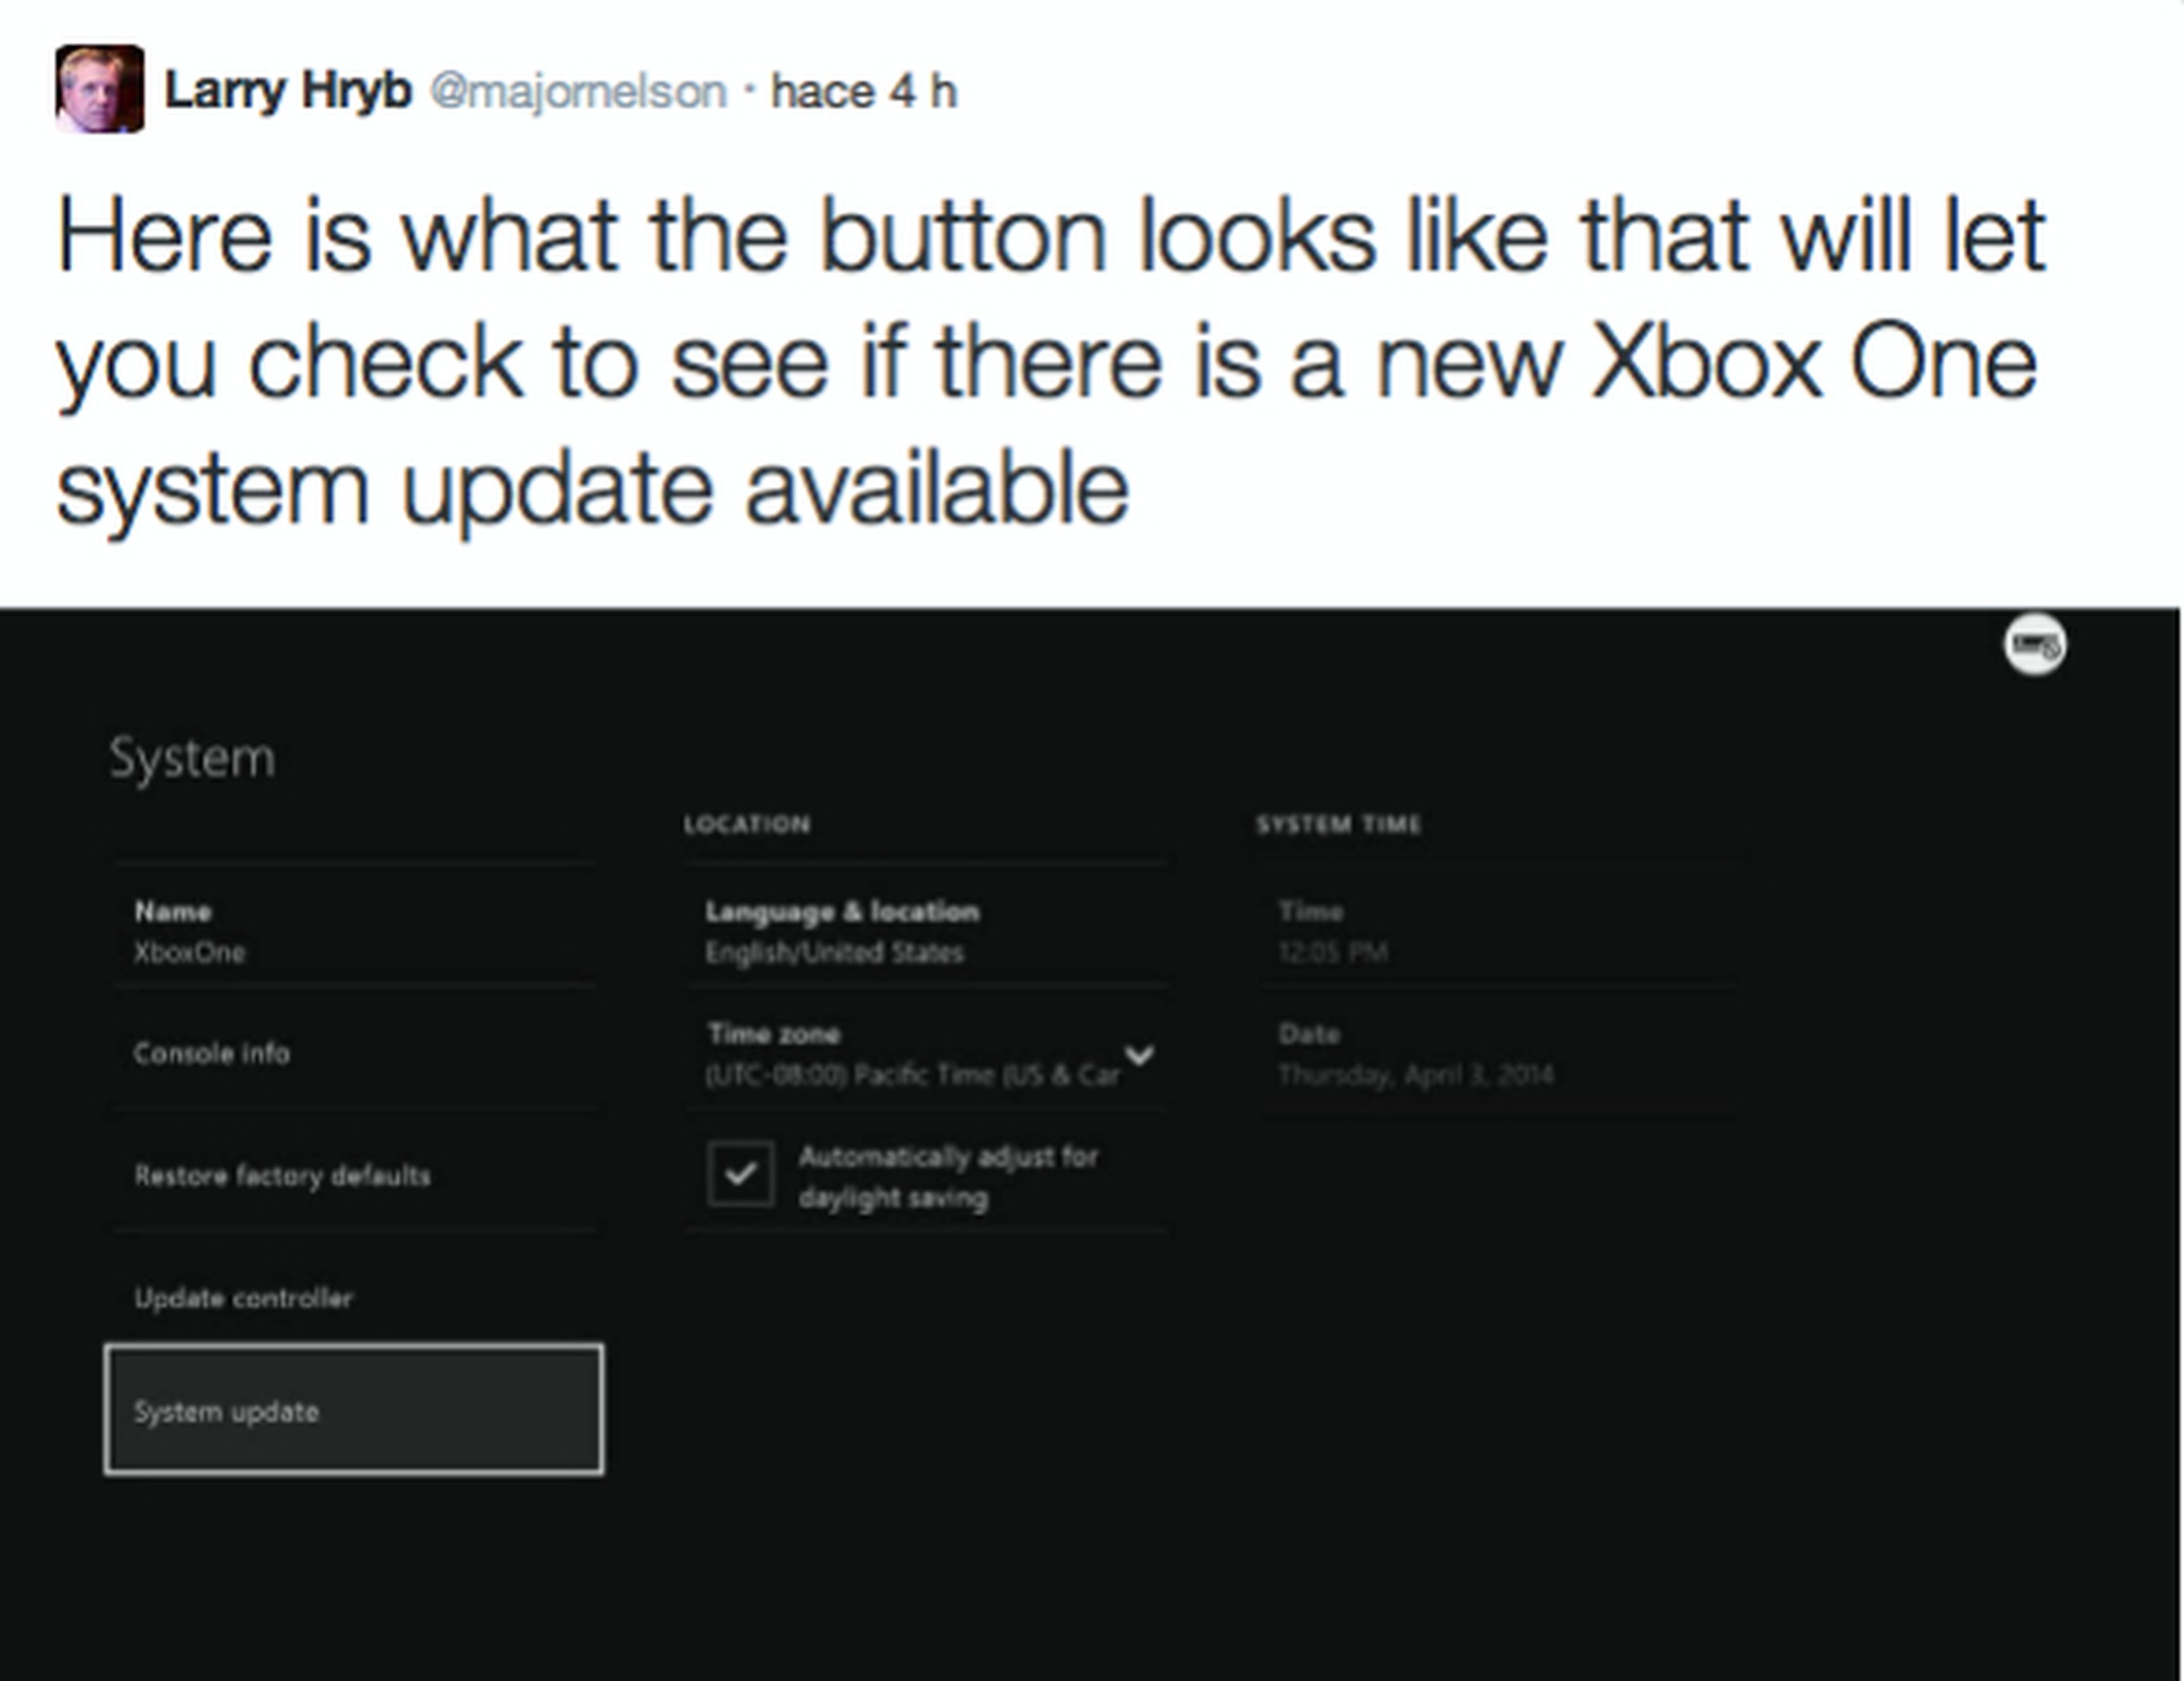 ¿Major Nelson no utiliza Kinect en Xbox One?